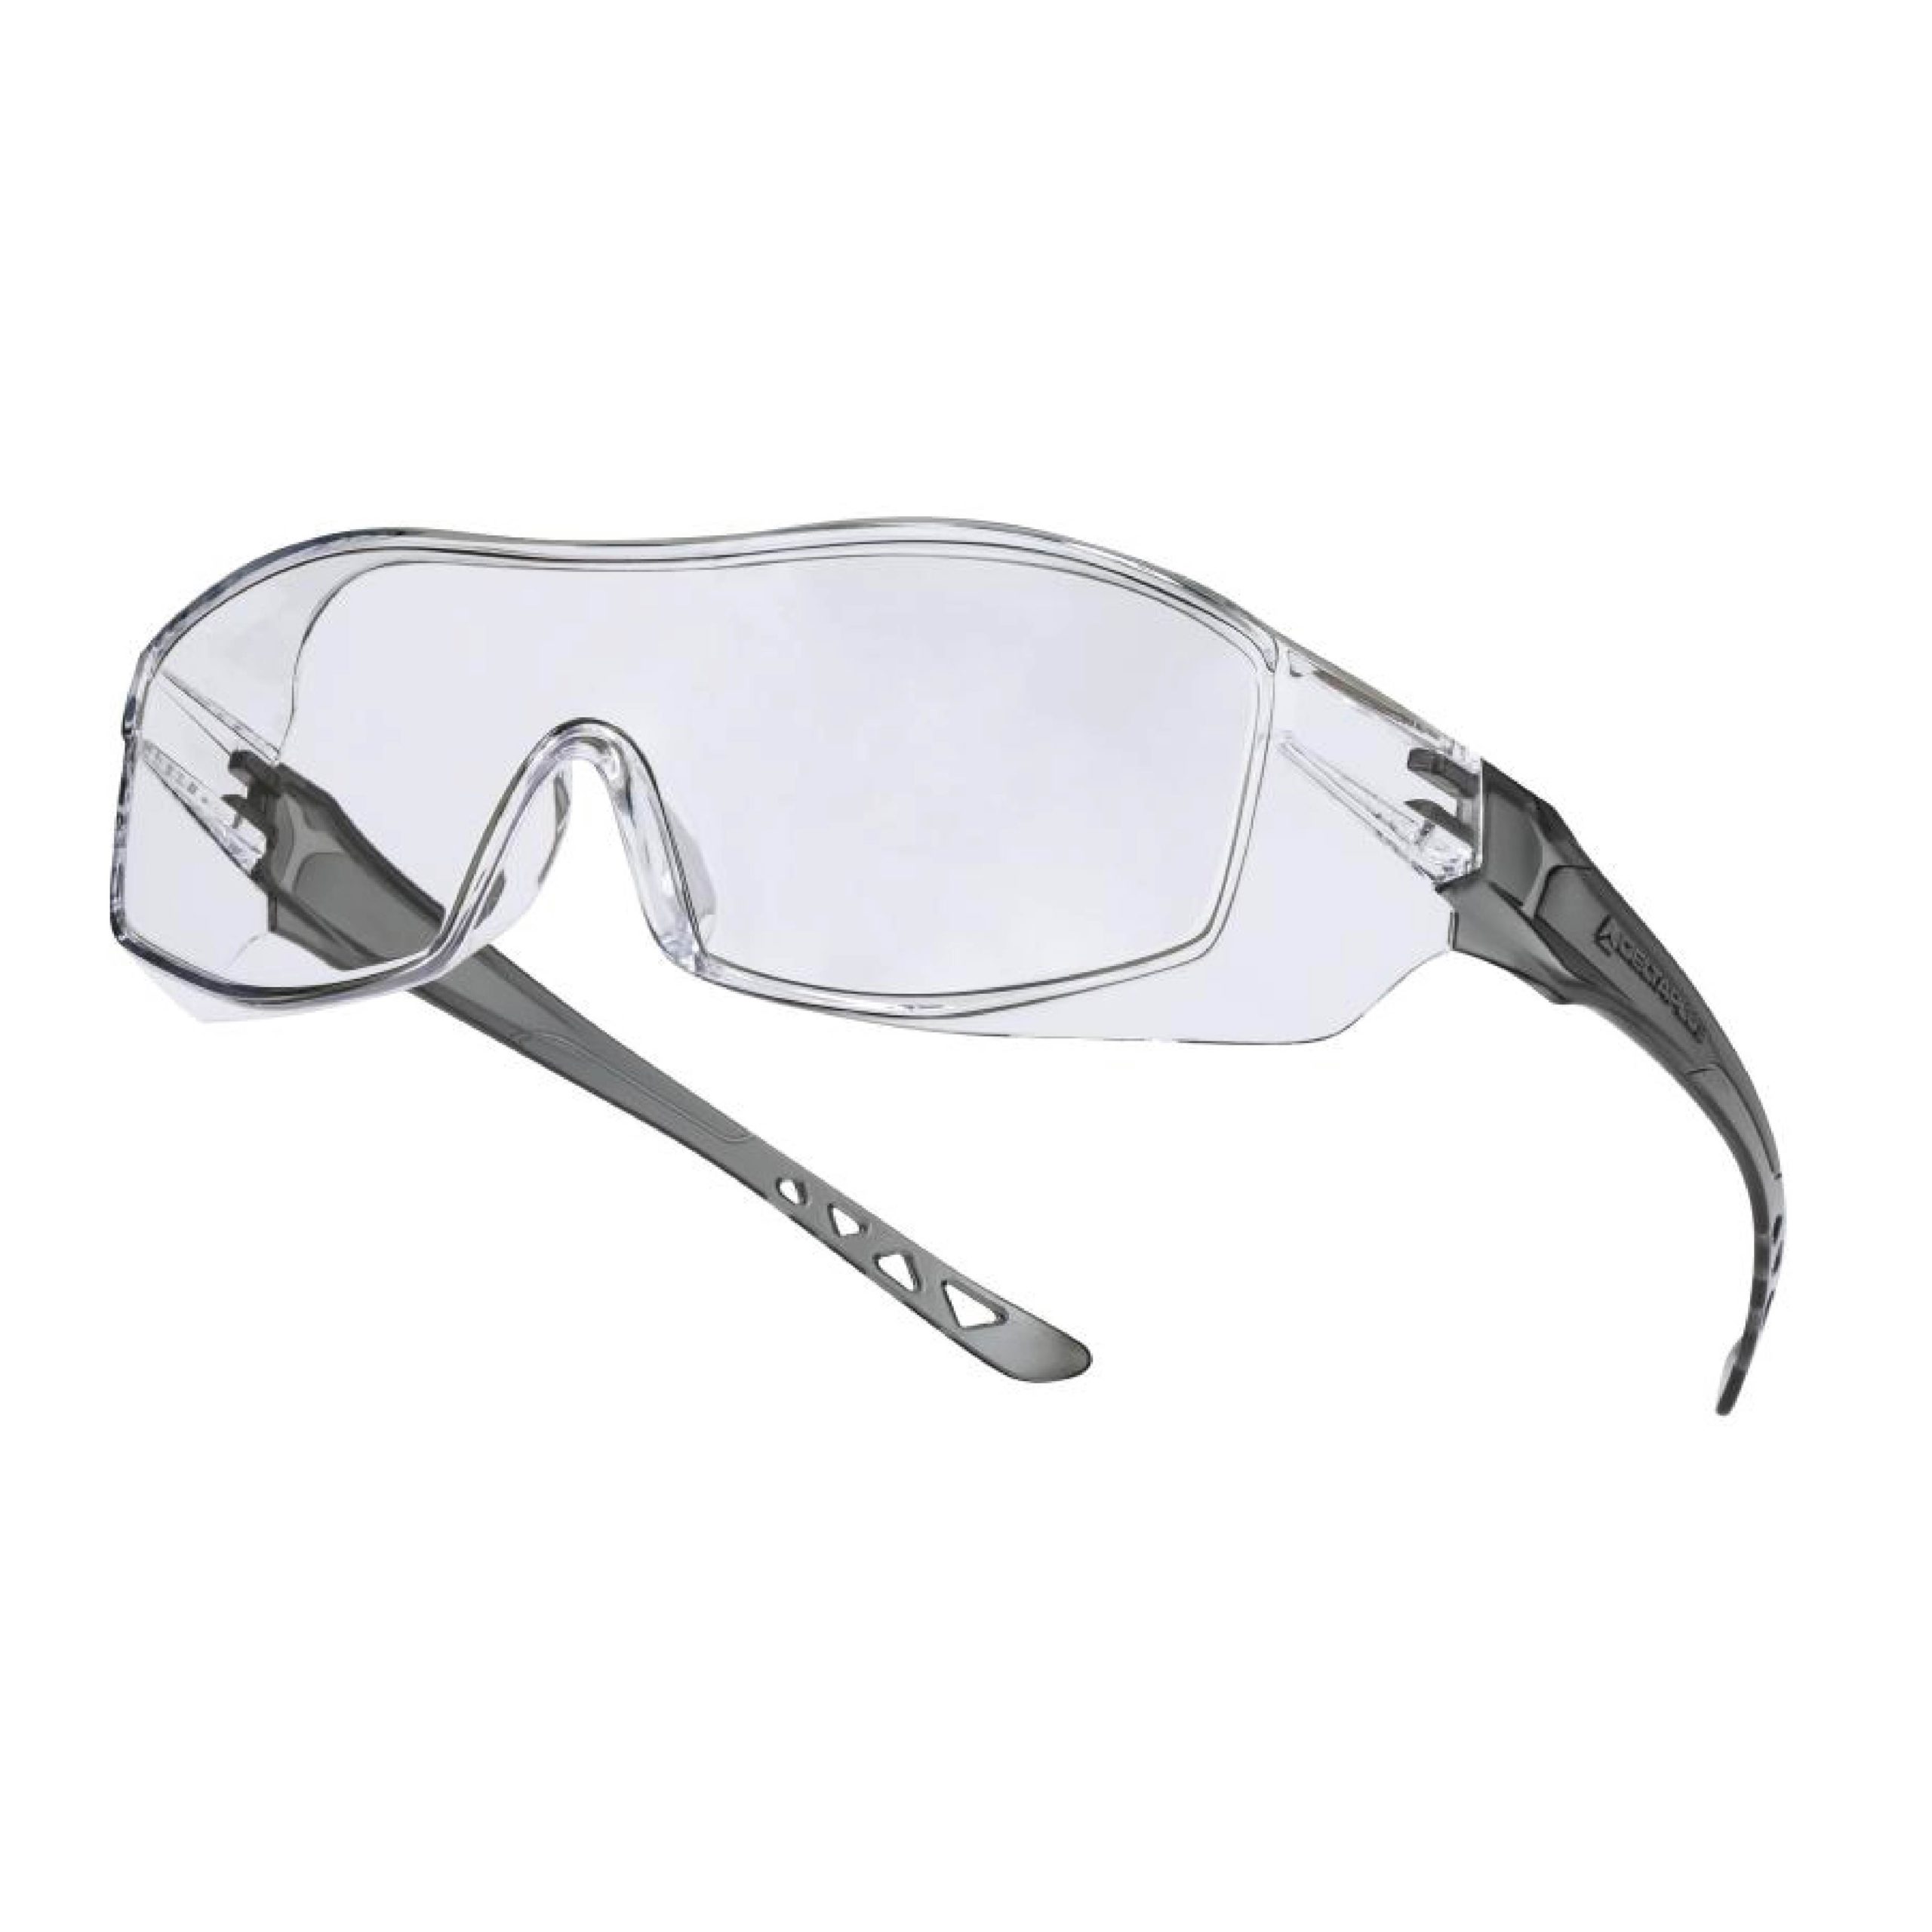 Single lens polycarbonate over glasses